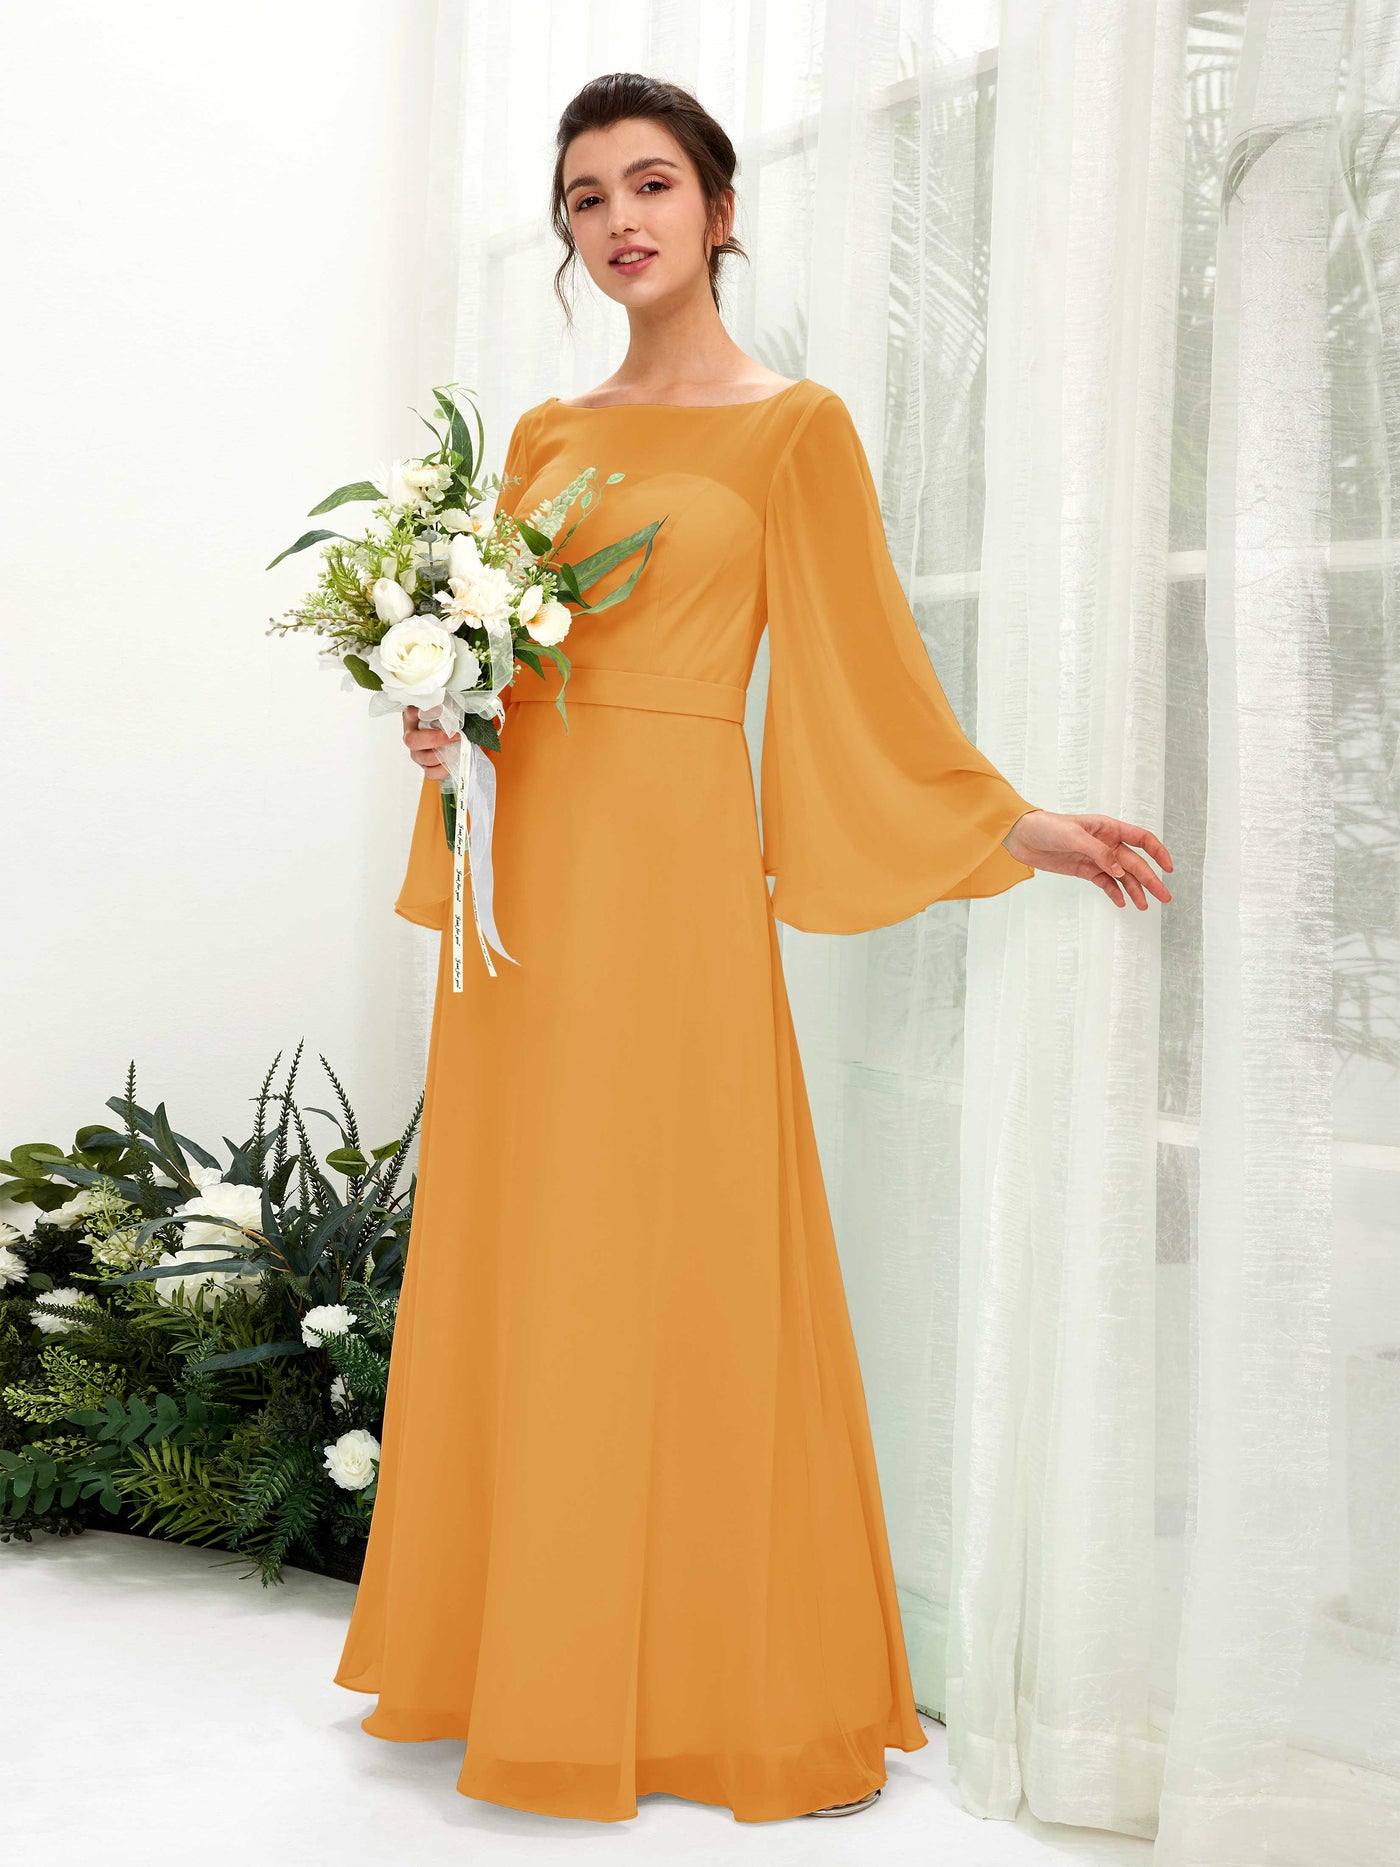 Mango Bridesmaid Dresses Bridesmaid Dress A-line Chiffon Bateau Full Length Long Sleeves Wedding Party Dress (81220502)#color_mango